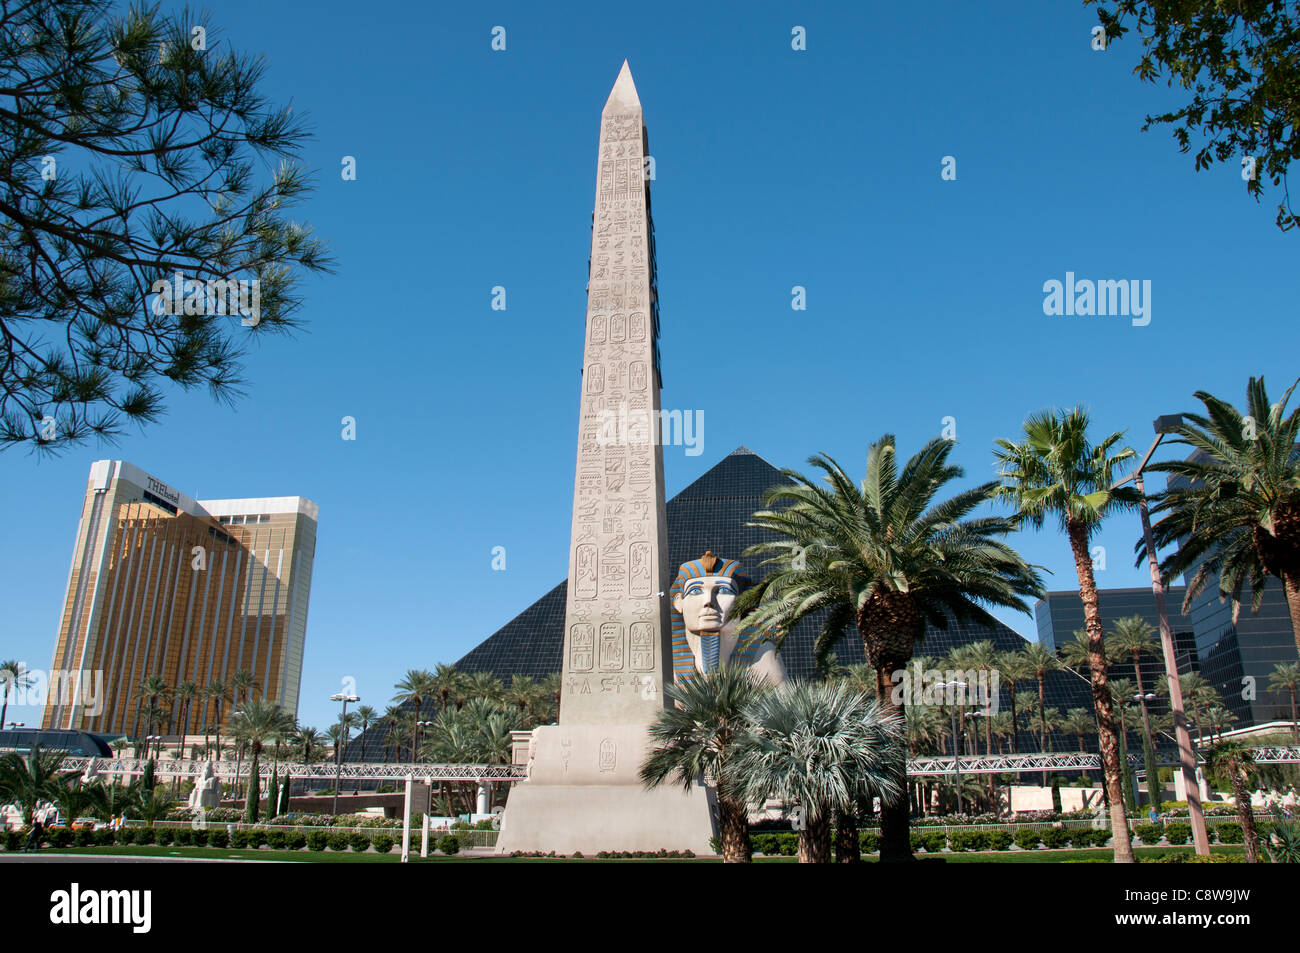 Obelisk Casino Luxor Las Vegas Nevada Sphinx Pyramide Glücksspiel Hauptstadt der Welt der Vereinigten Staaten Stockfoto